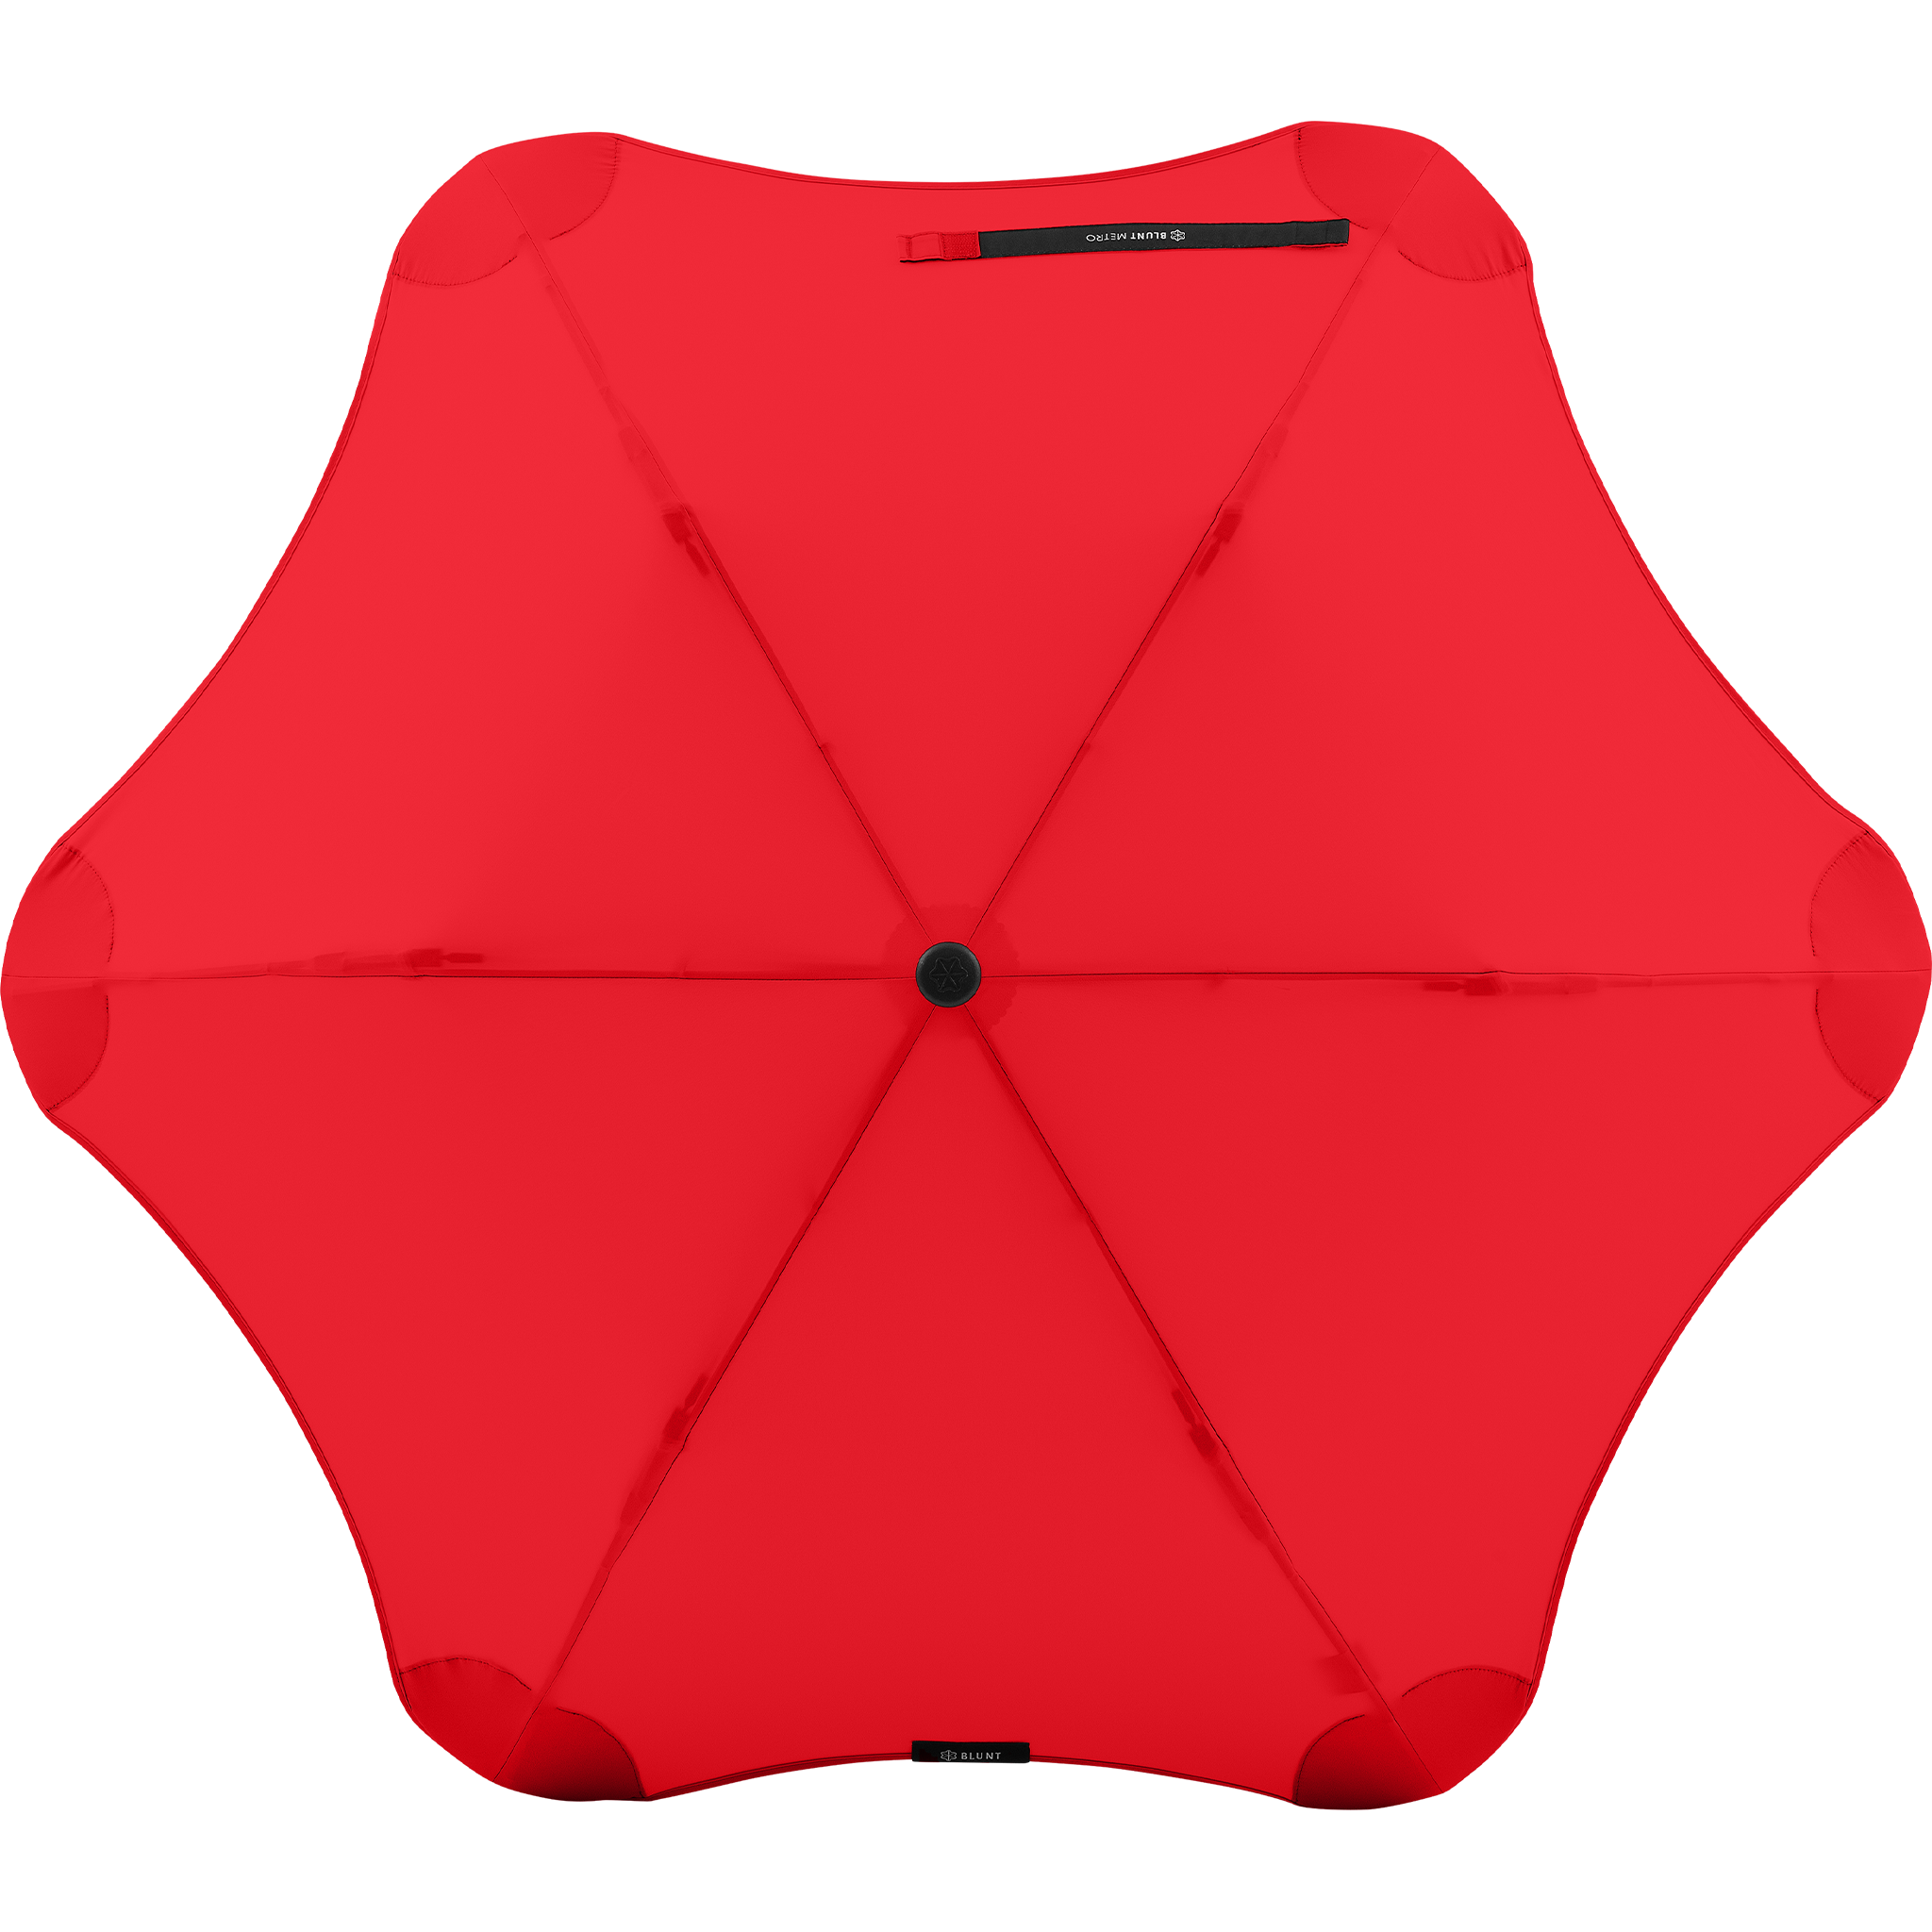 2020 Metro Red Blunt Umbrella Top View